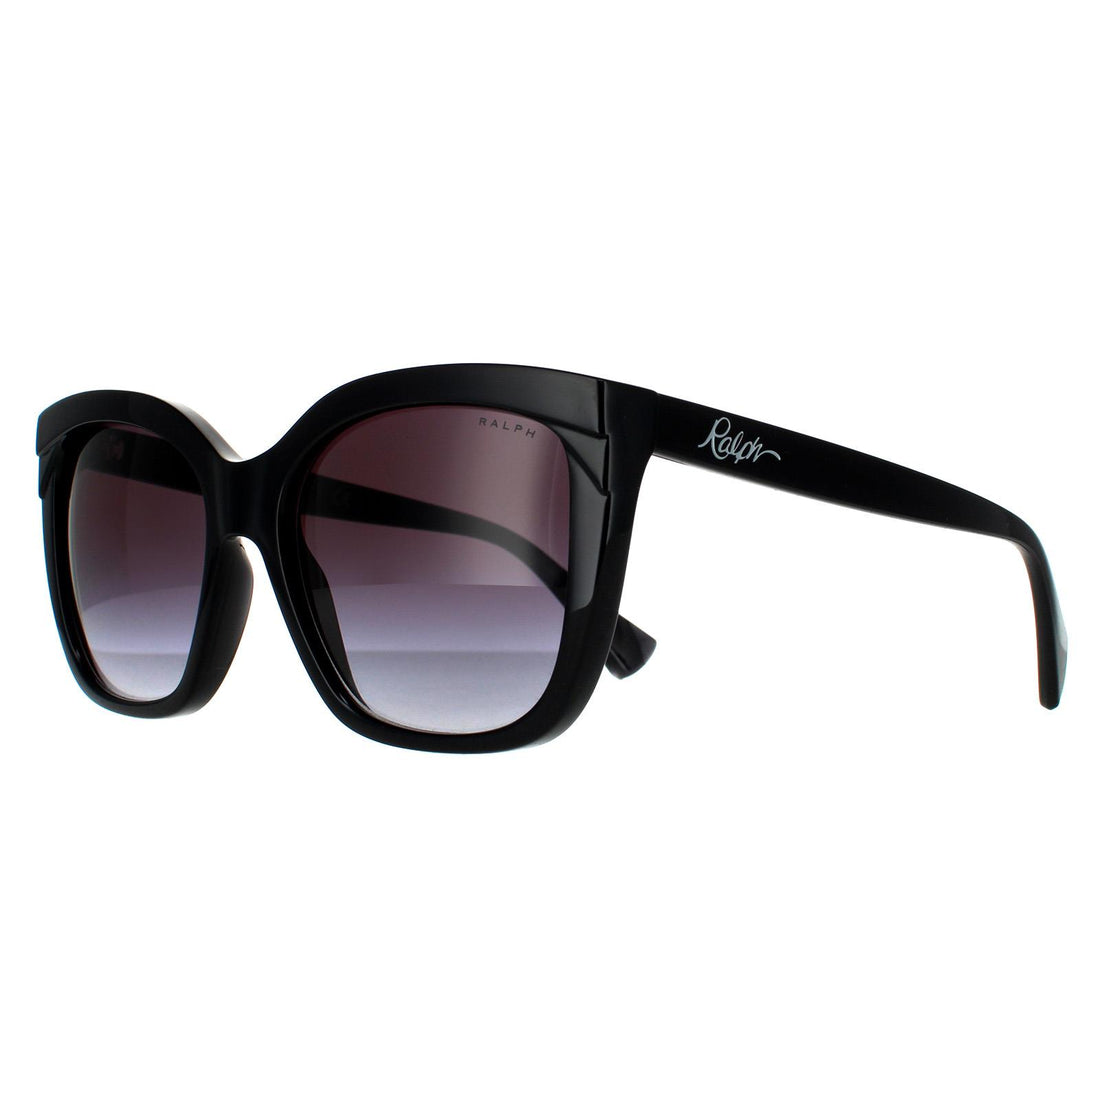 Ralph by Ralph Lauren Sunglasses RA5265 575225 Shiny Black Grey Gradient